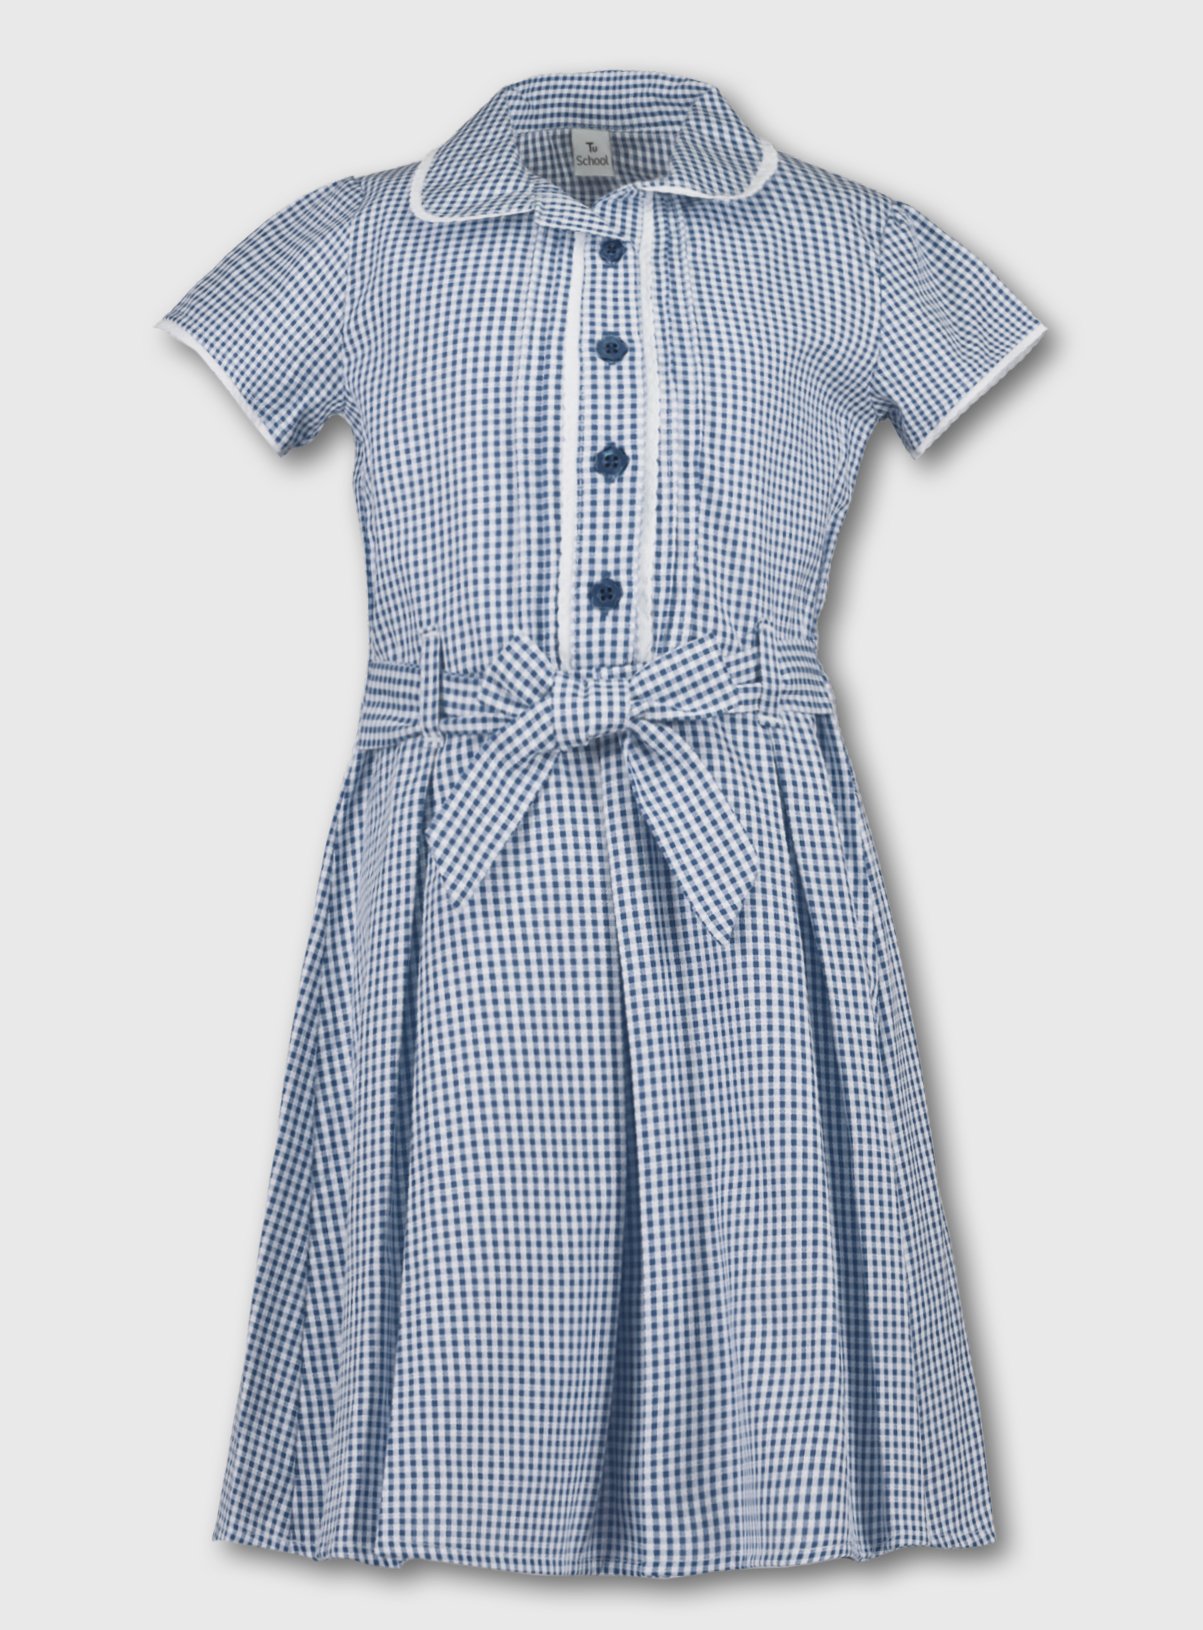 Navy Blue Classic Gingham School Dress 